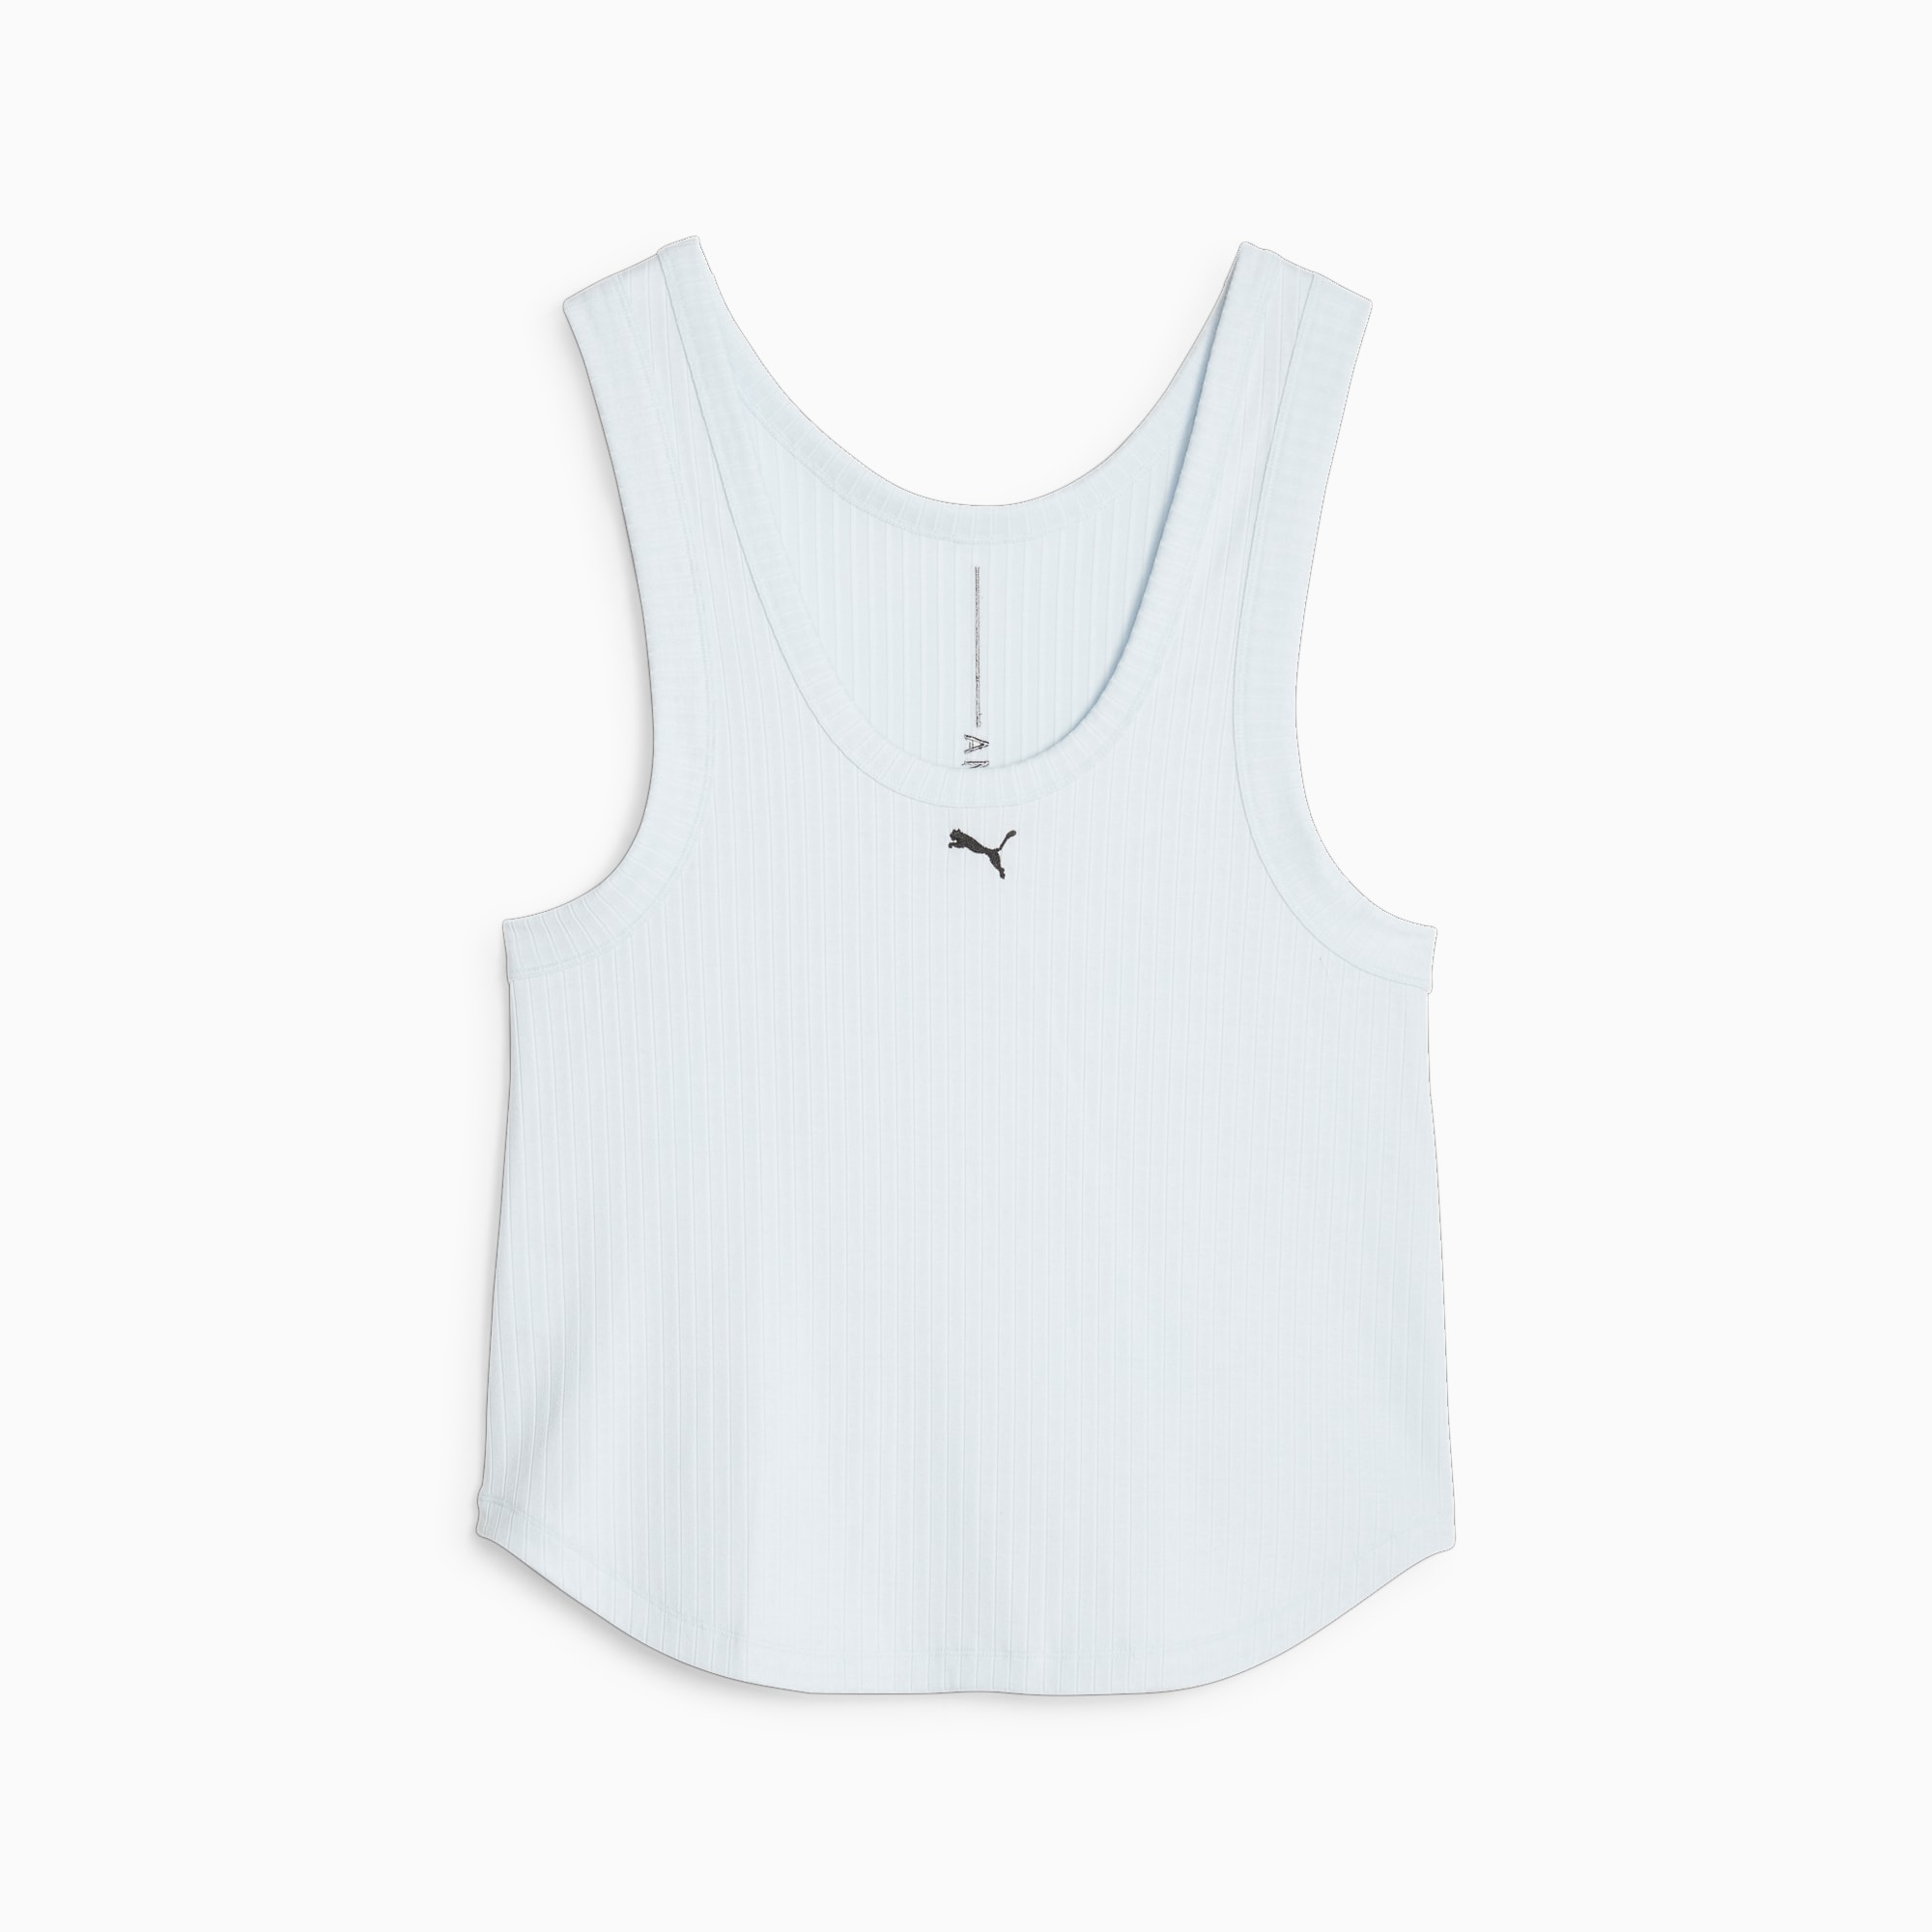 Explore Nike Women's Yoga Tank Tops & Sleeveless Shirts. Nike CA